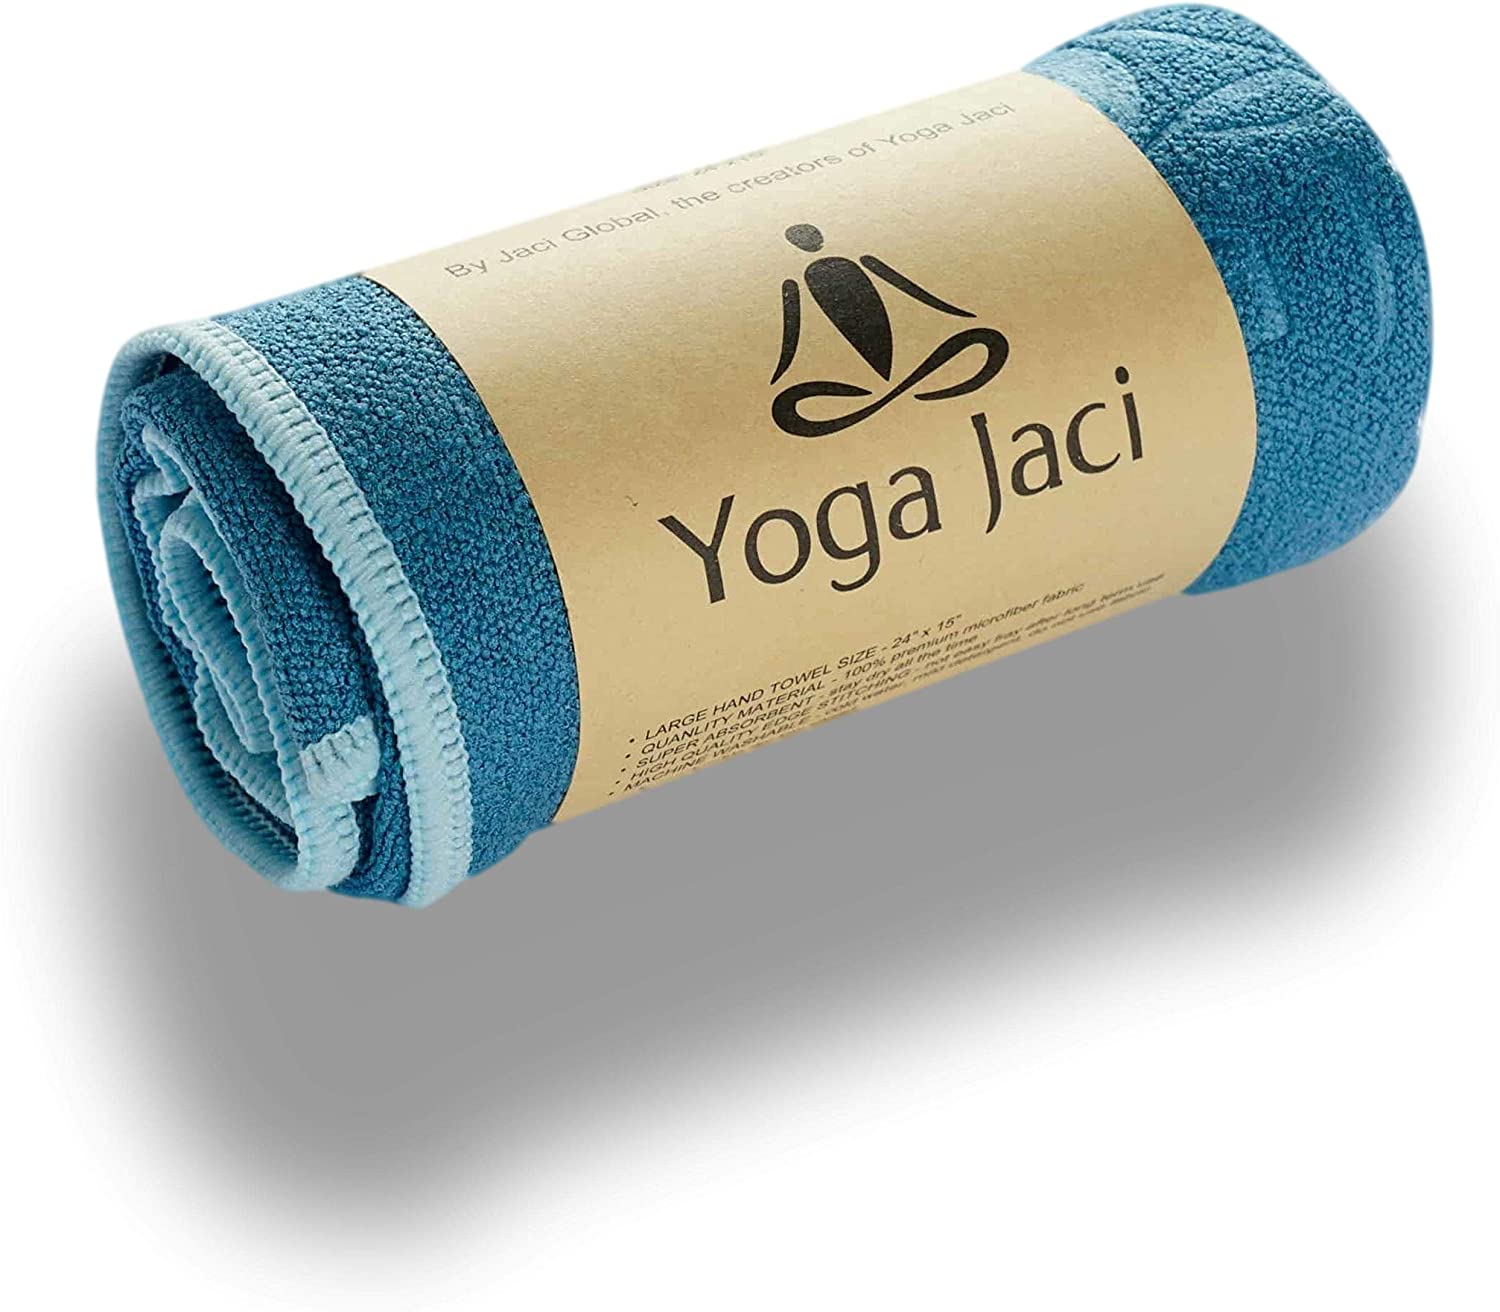 Yoga Jaci Yoga Mat Towel - Hand Towel - Combo Set - Non Slip and